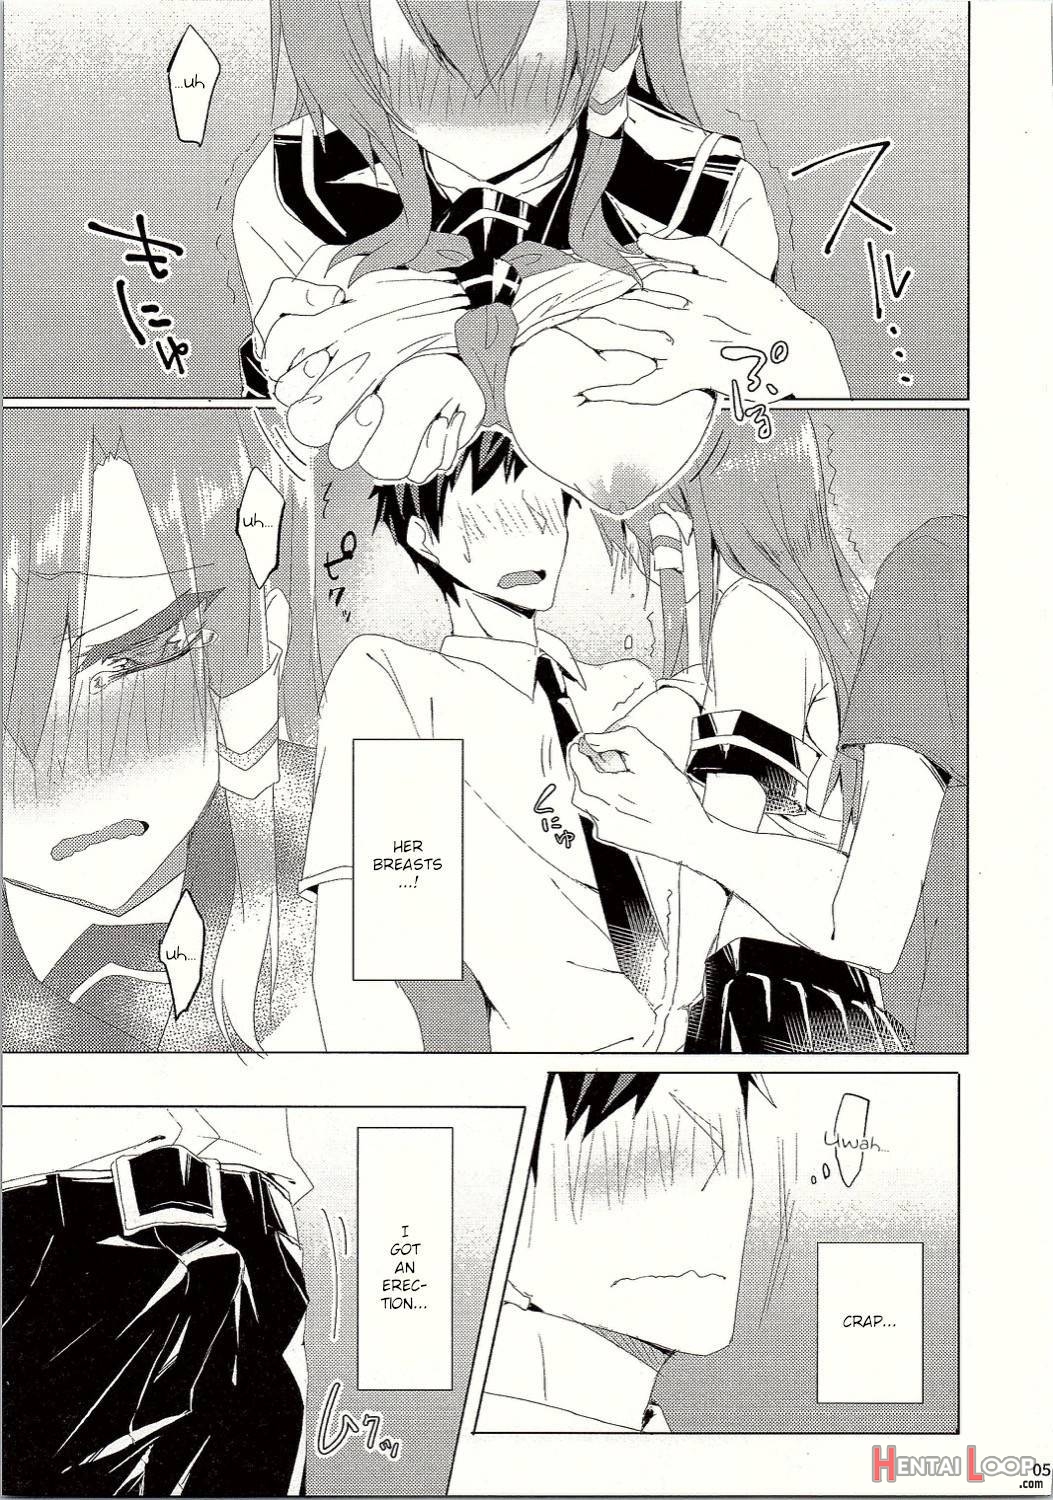 Sanae-san In Chikan Densha page 4